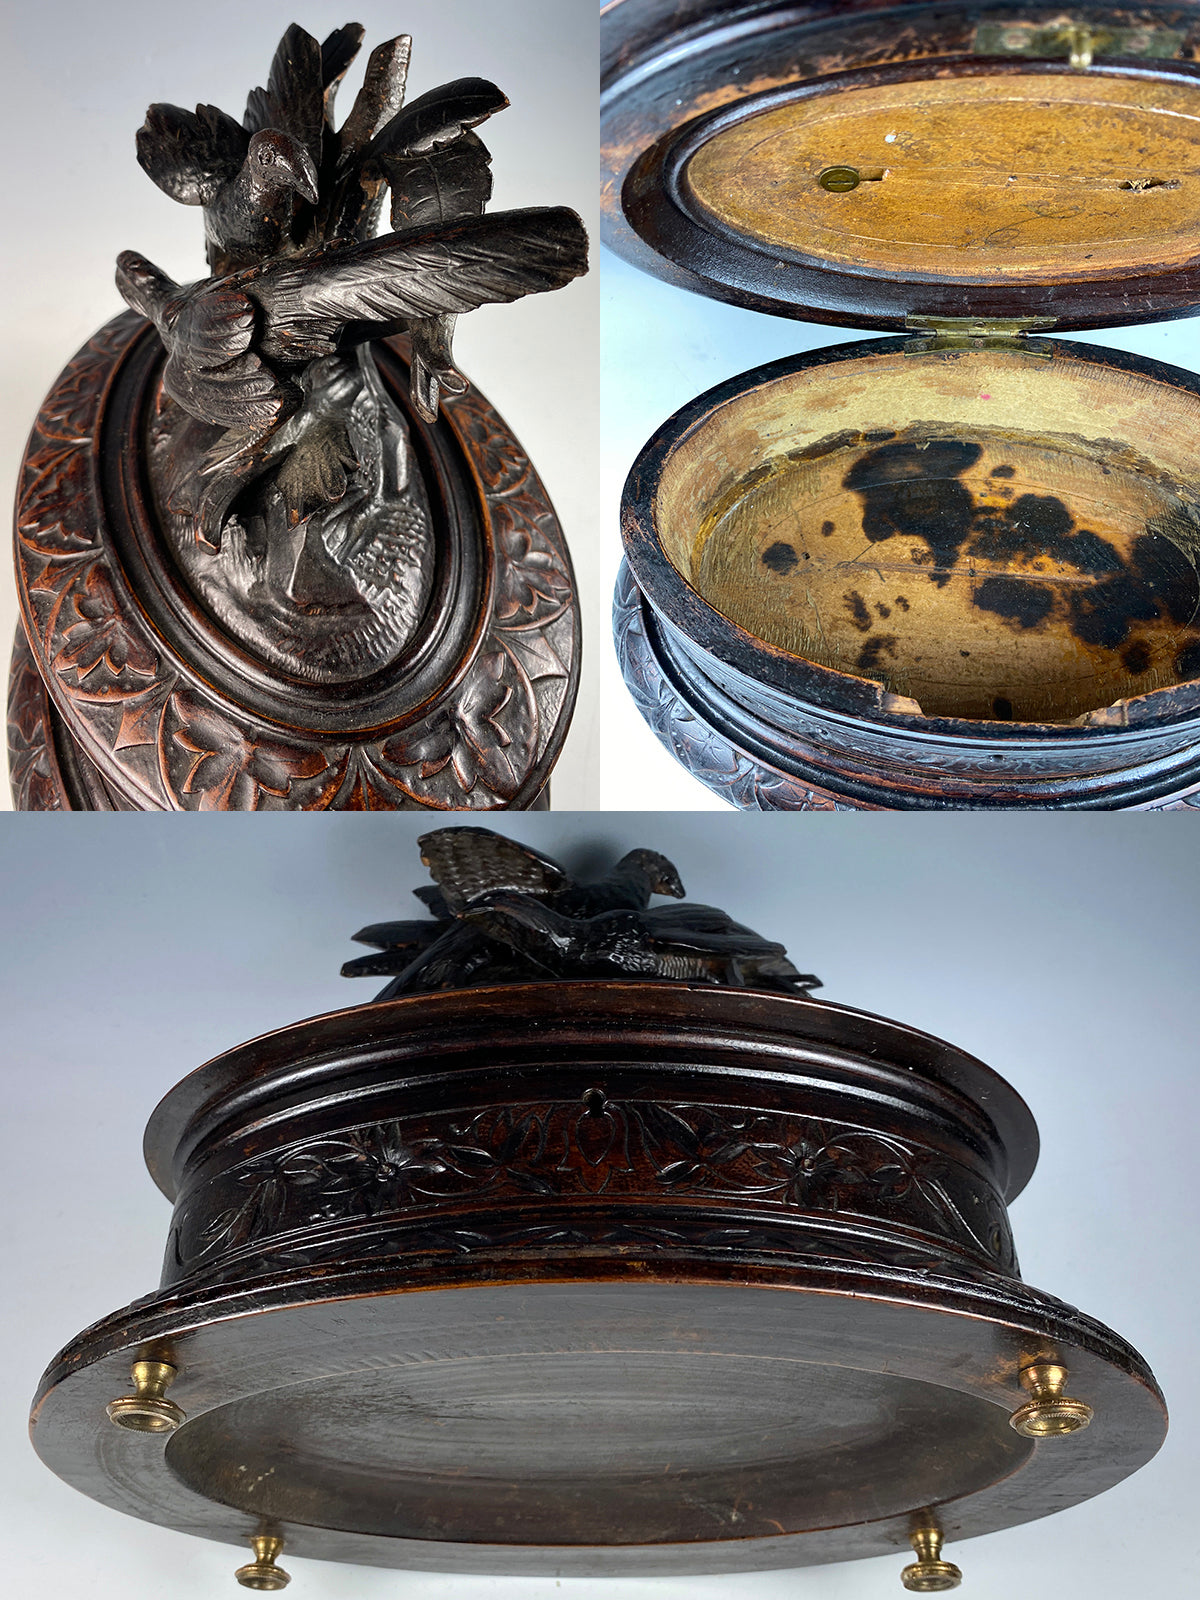 Antique Swiss HC Black Forest 10" Oval Jewelry Casket, Chest, Box, Pheasants